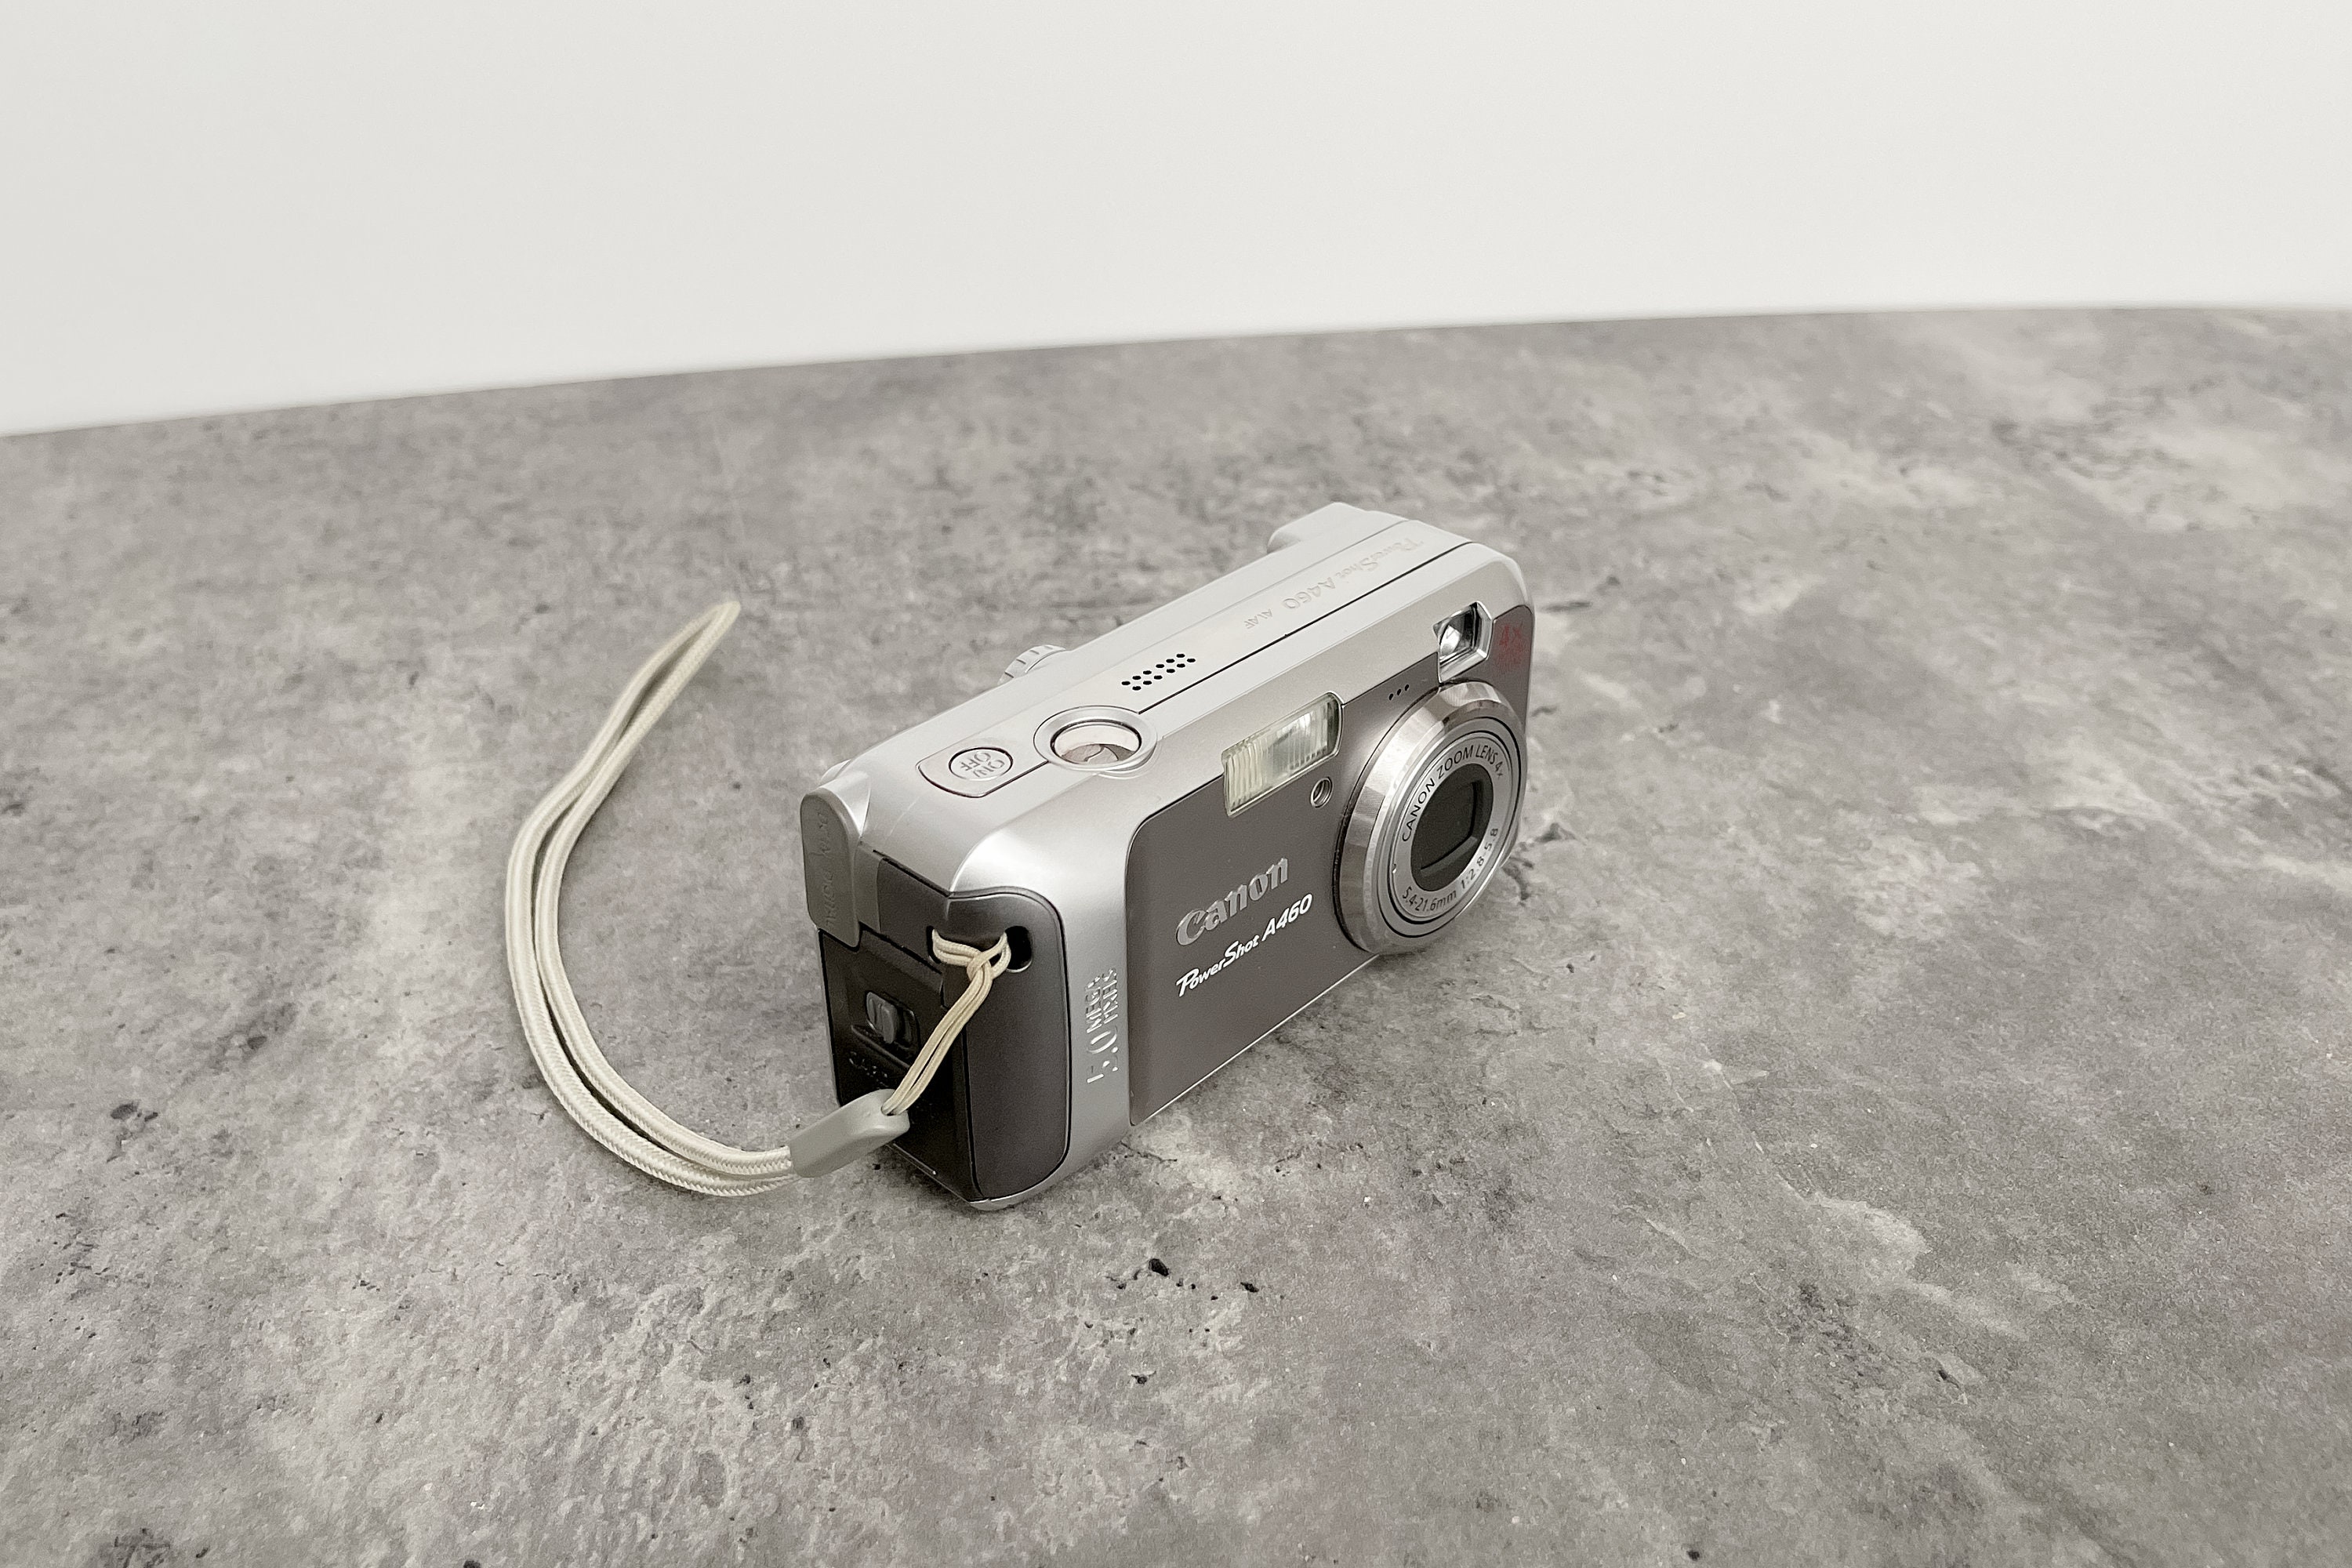 briefpapier Komkommer gebruiker Digital Camera Canon Powershot A460 / Compact Digital Camera / - Etsy